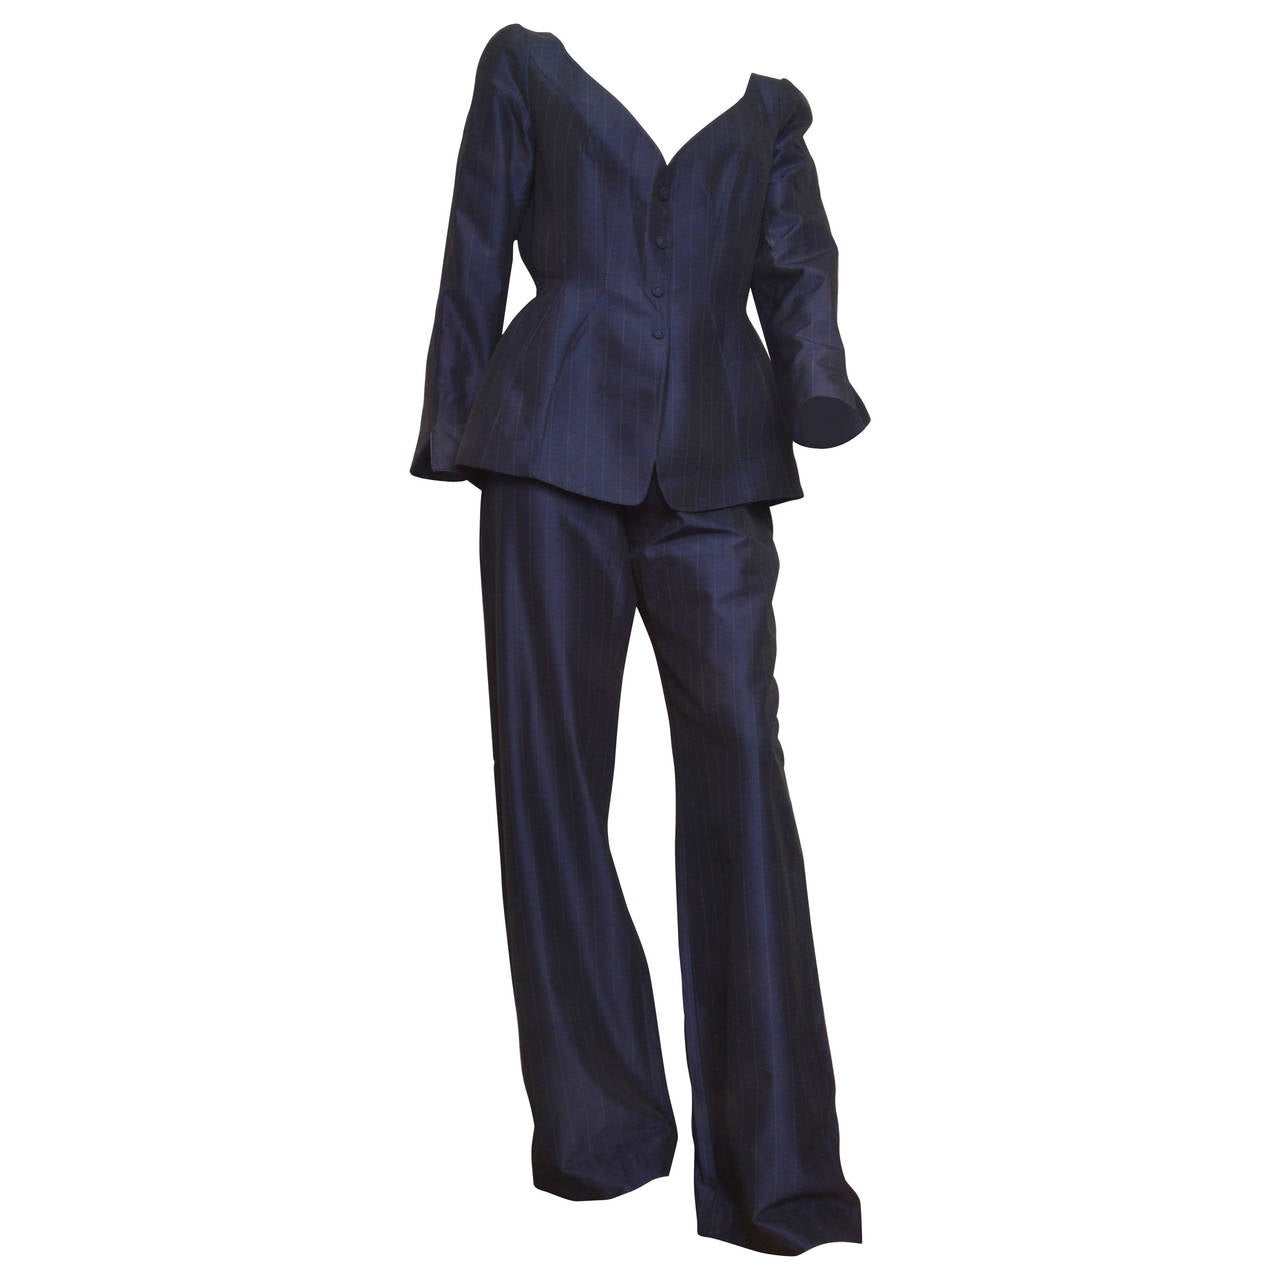 Thierry Mugler Bib Navy Pinstripe Avant Garde Pant Suit